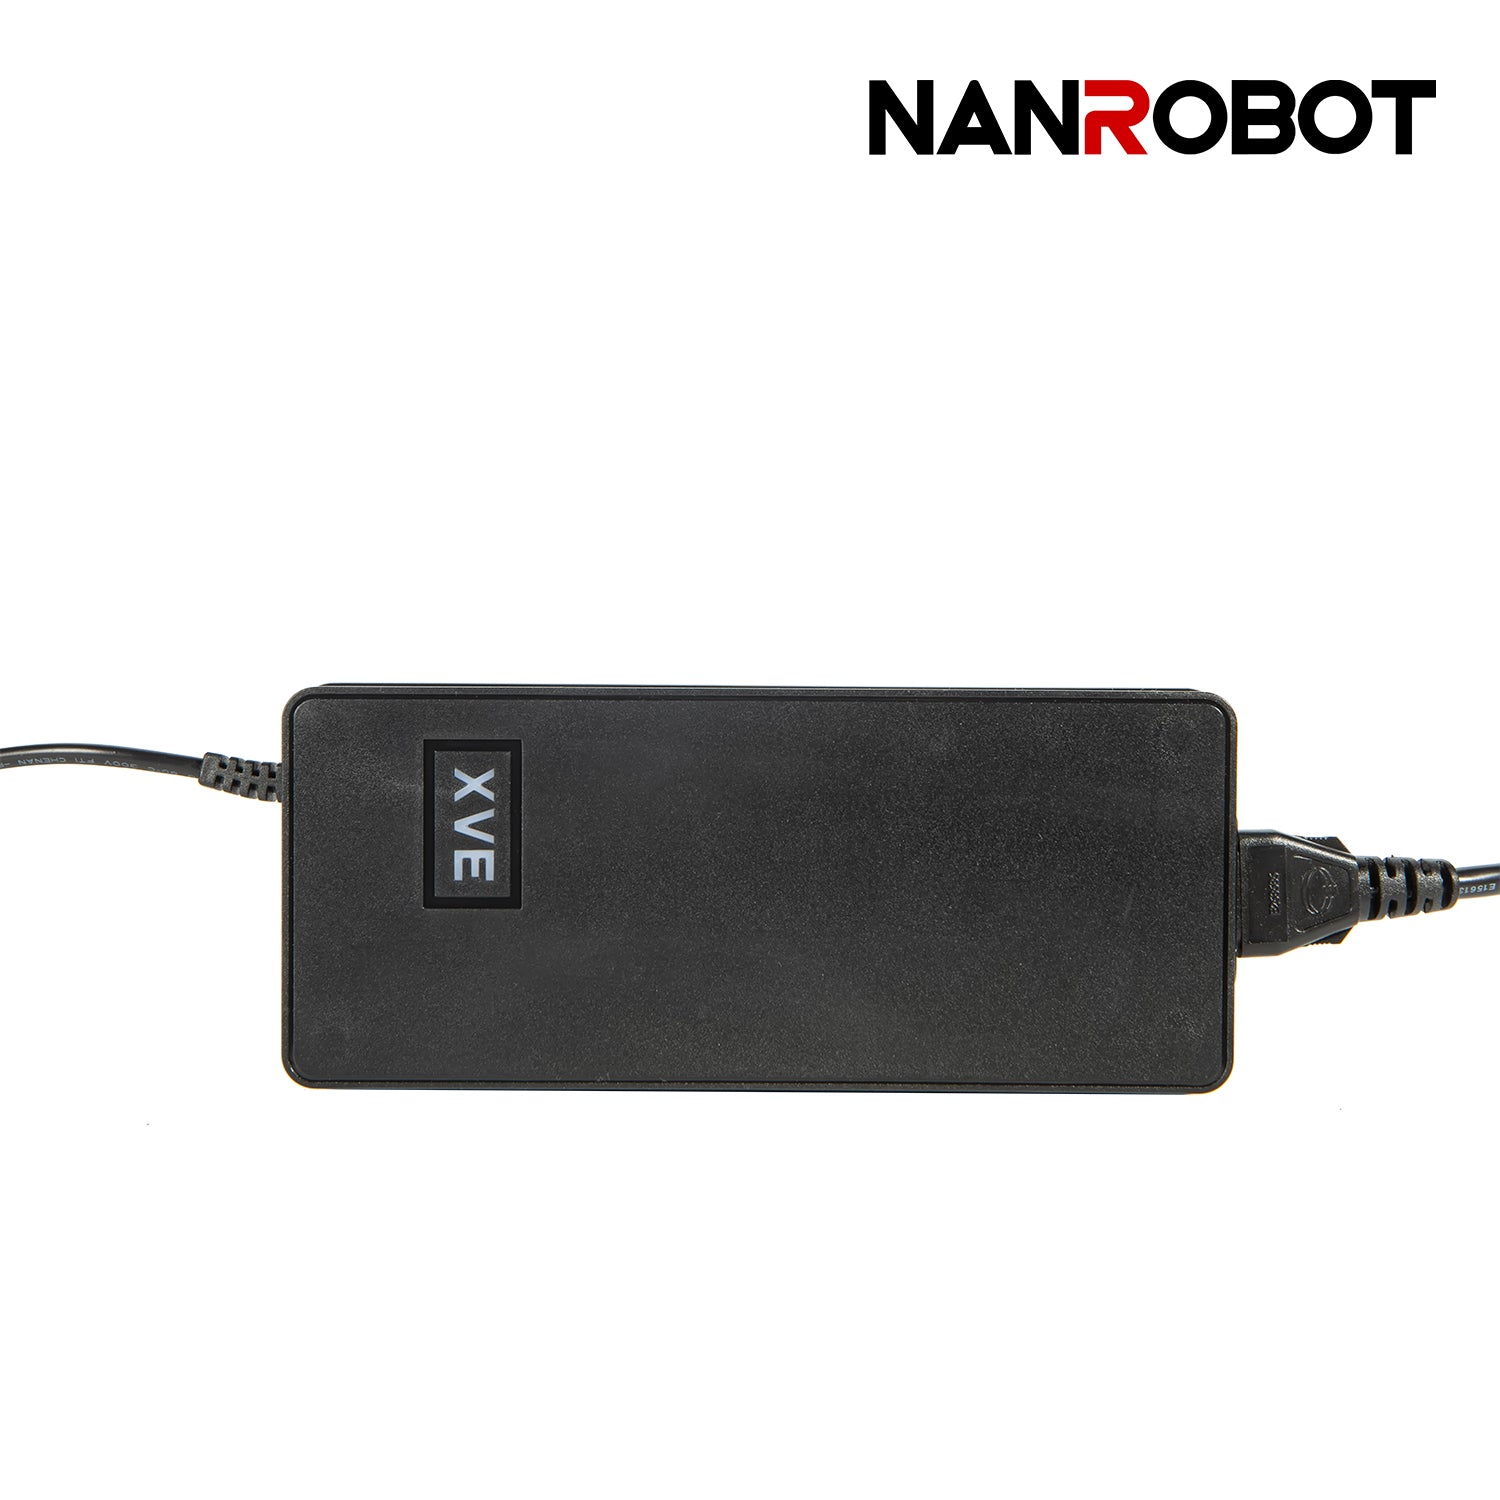 D6+ fast charger - NANROBOT